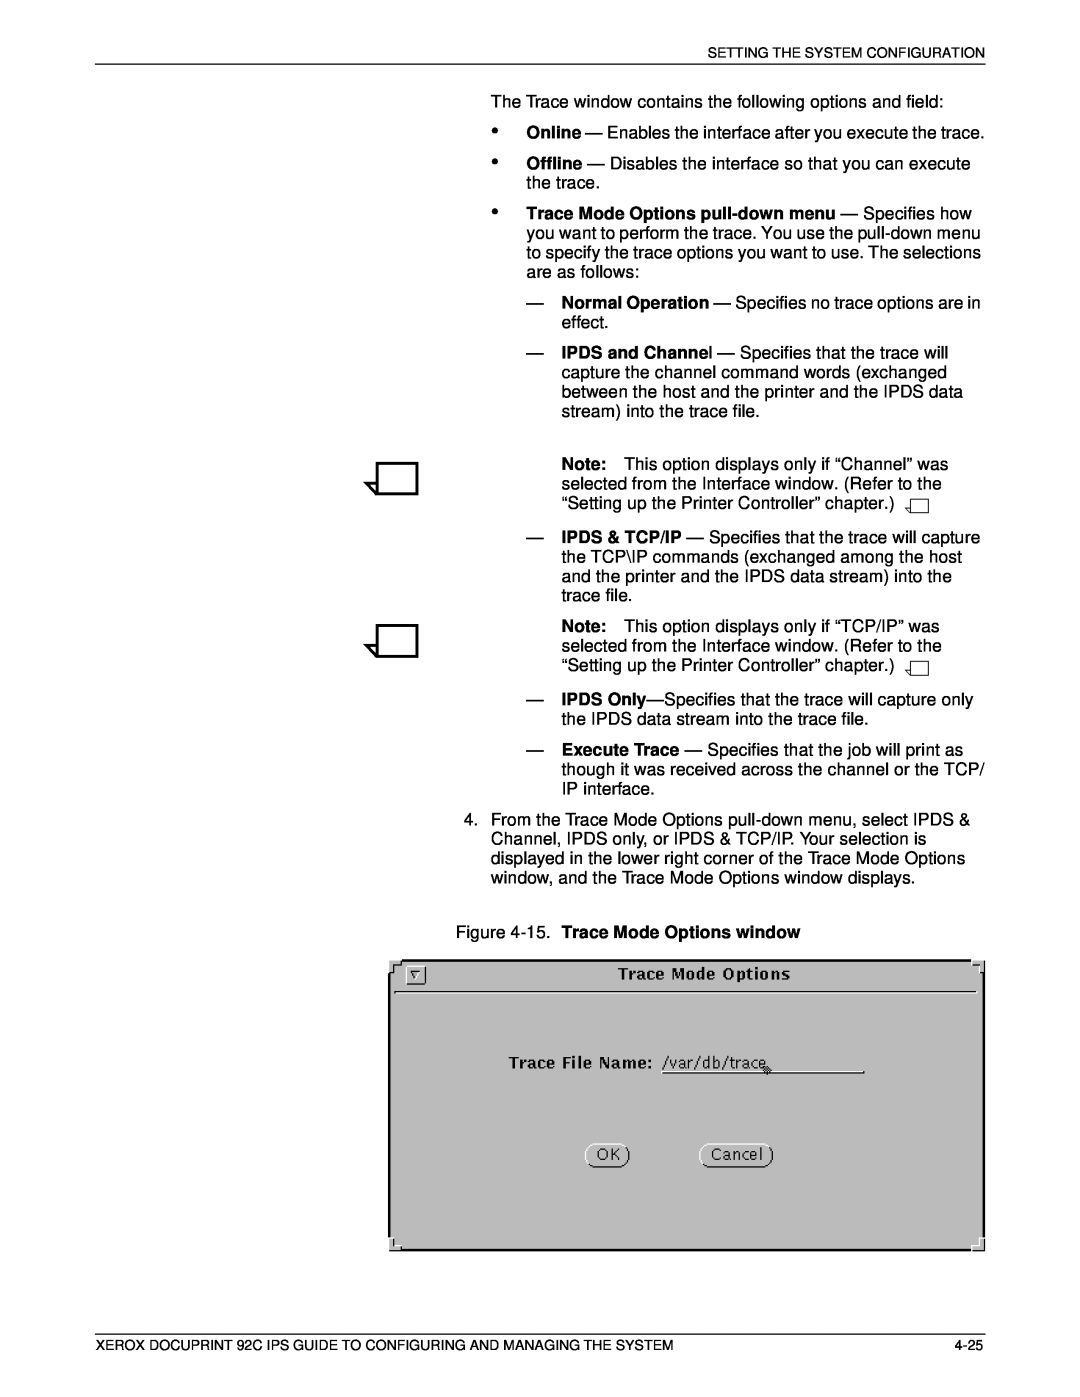 Xerox 92C IPS manual 15. Trace Mode Options window 